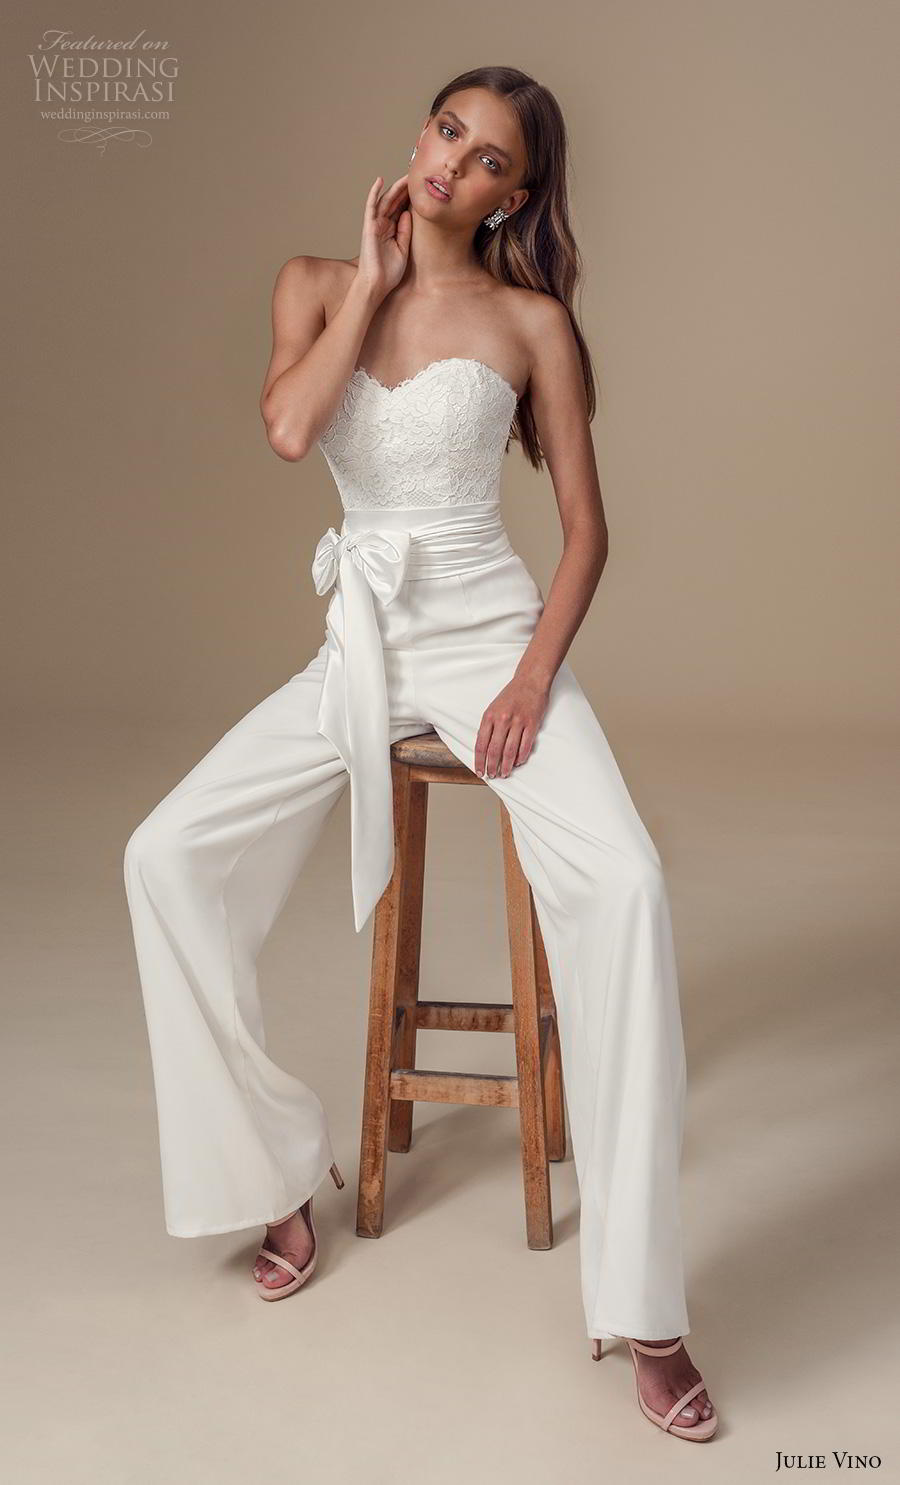 julie vino 2019 mimosa bridal strapless sweetheart neckline heavily embellished bodice jump suit wedding dress (10) mv